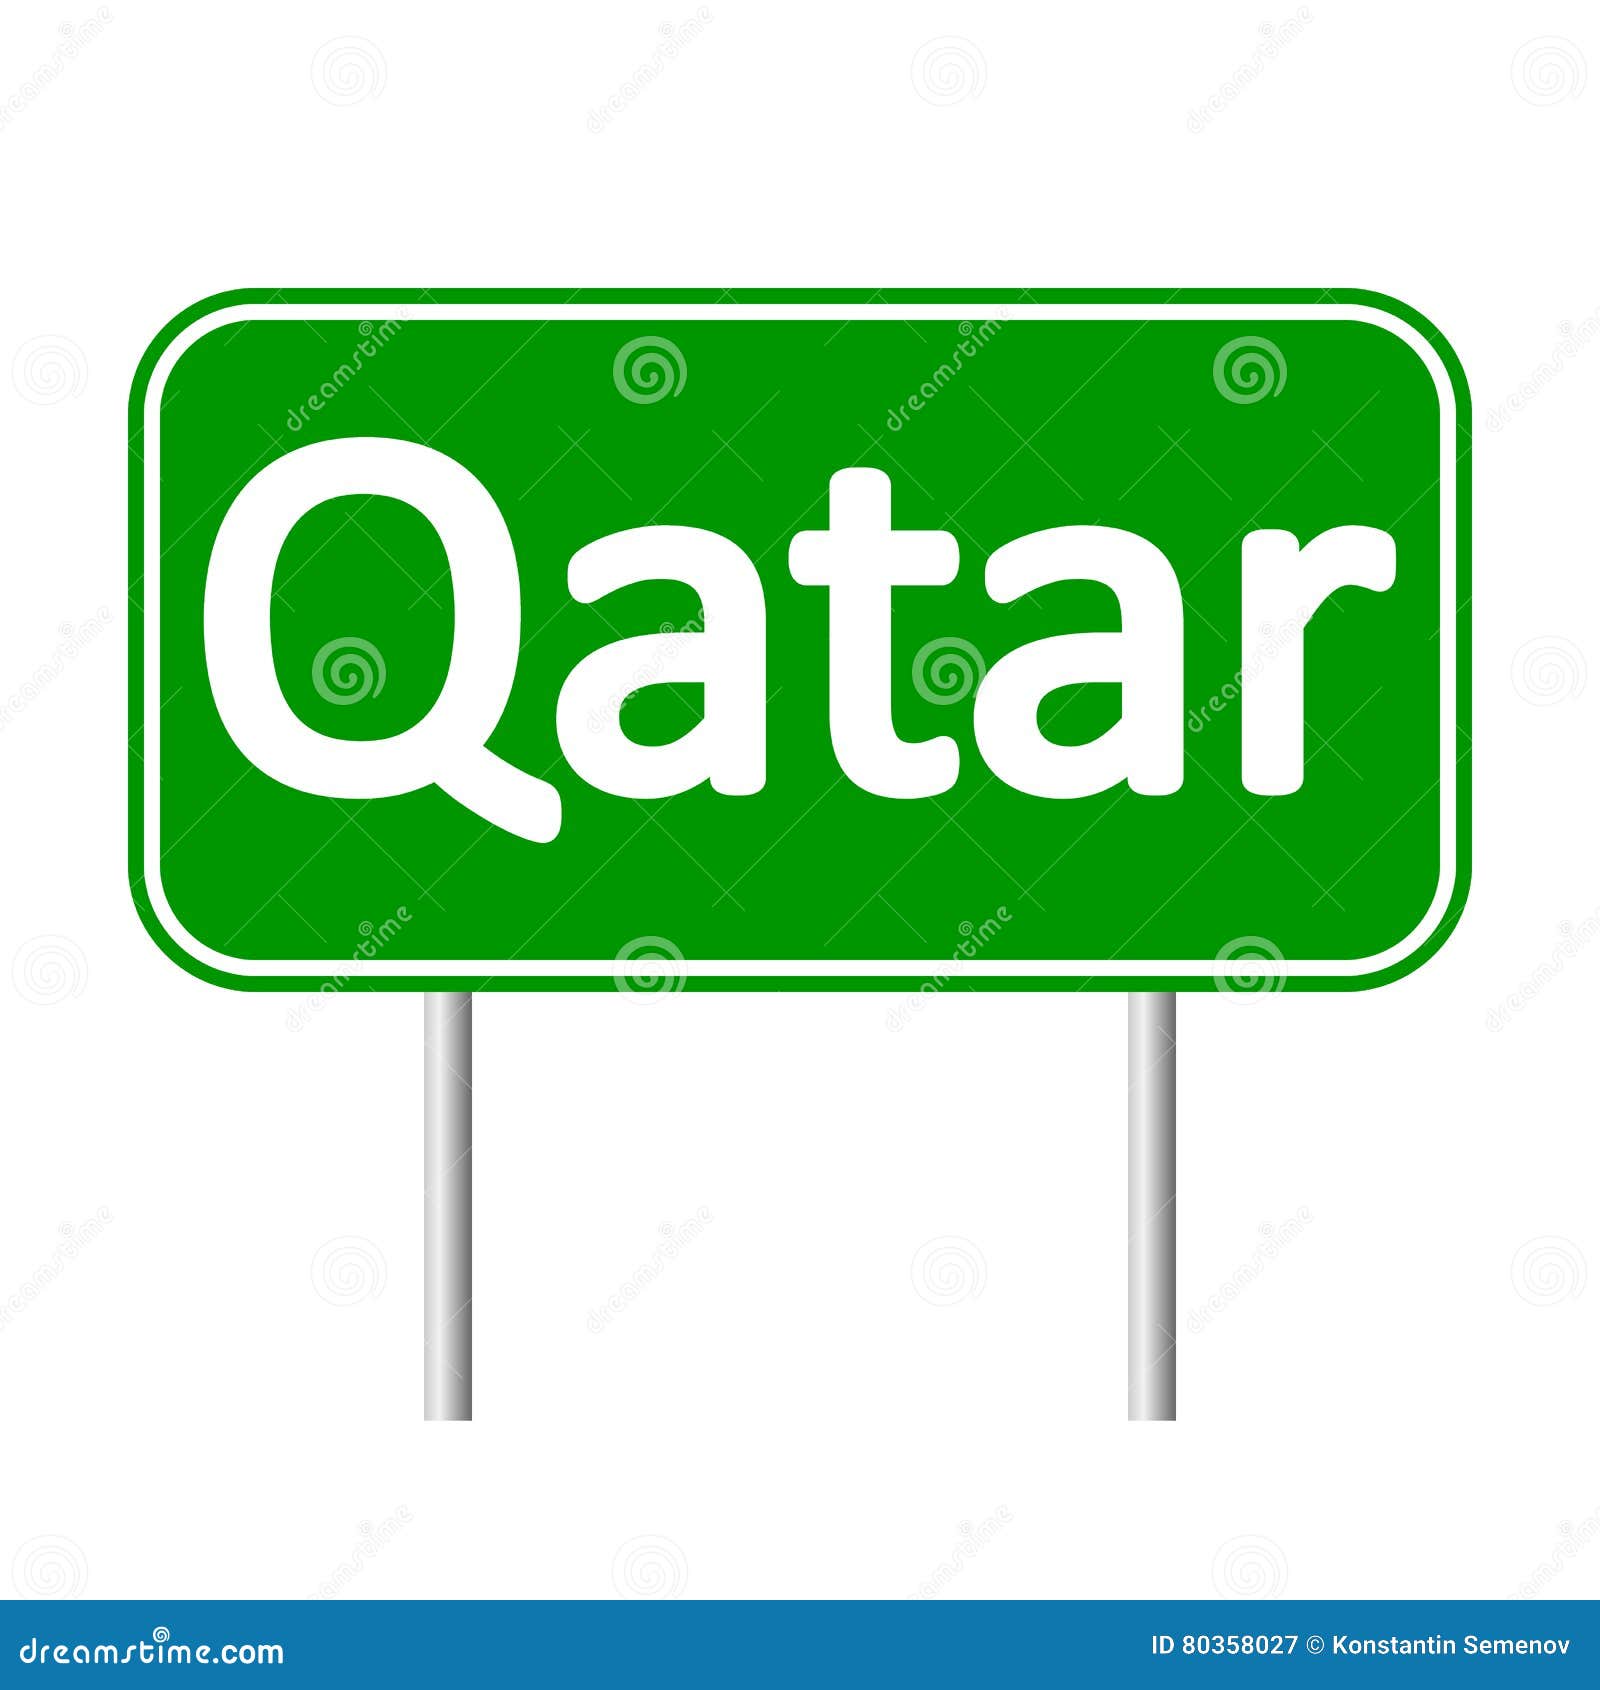 qatar road sign.